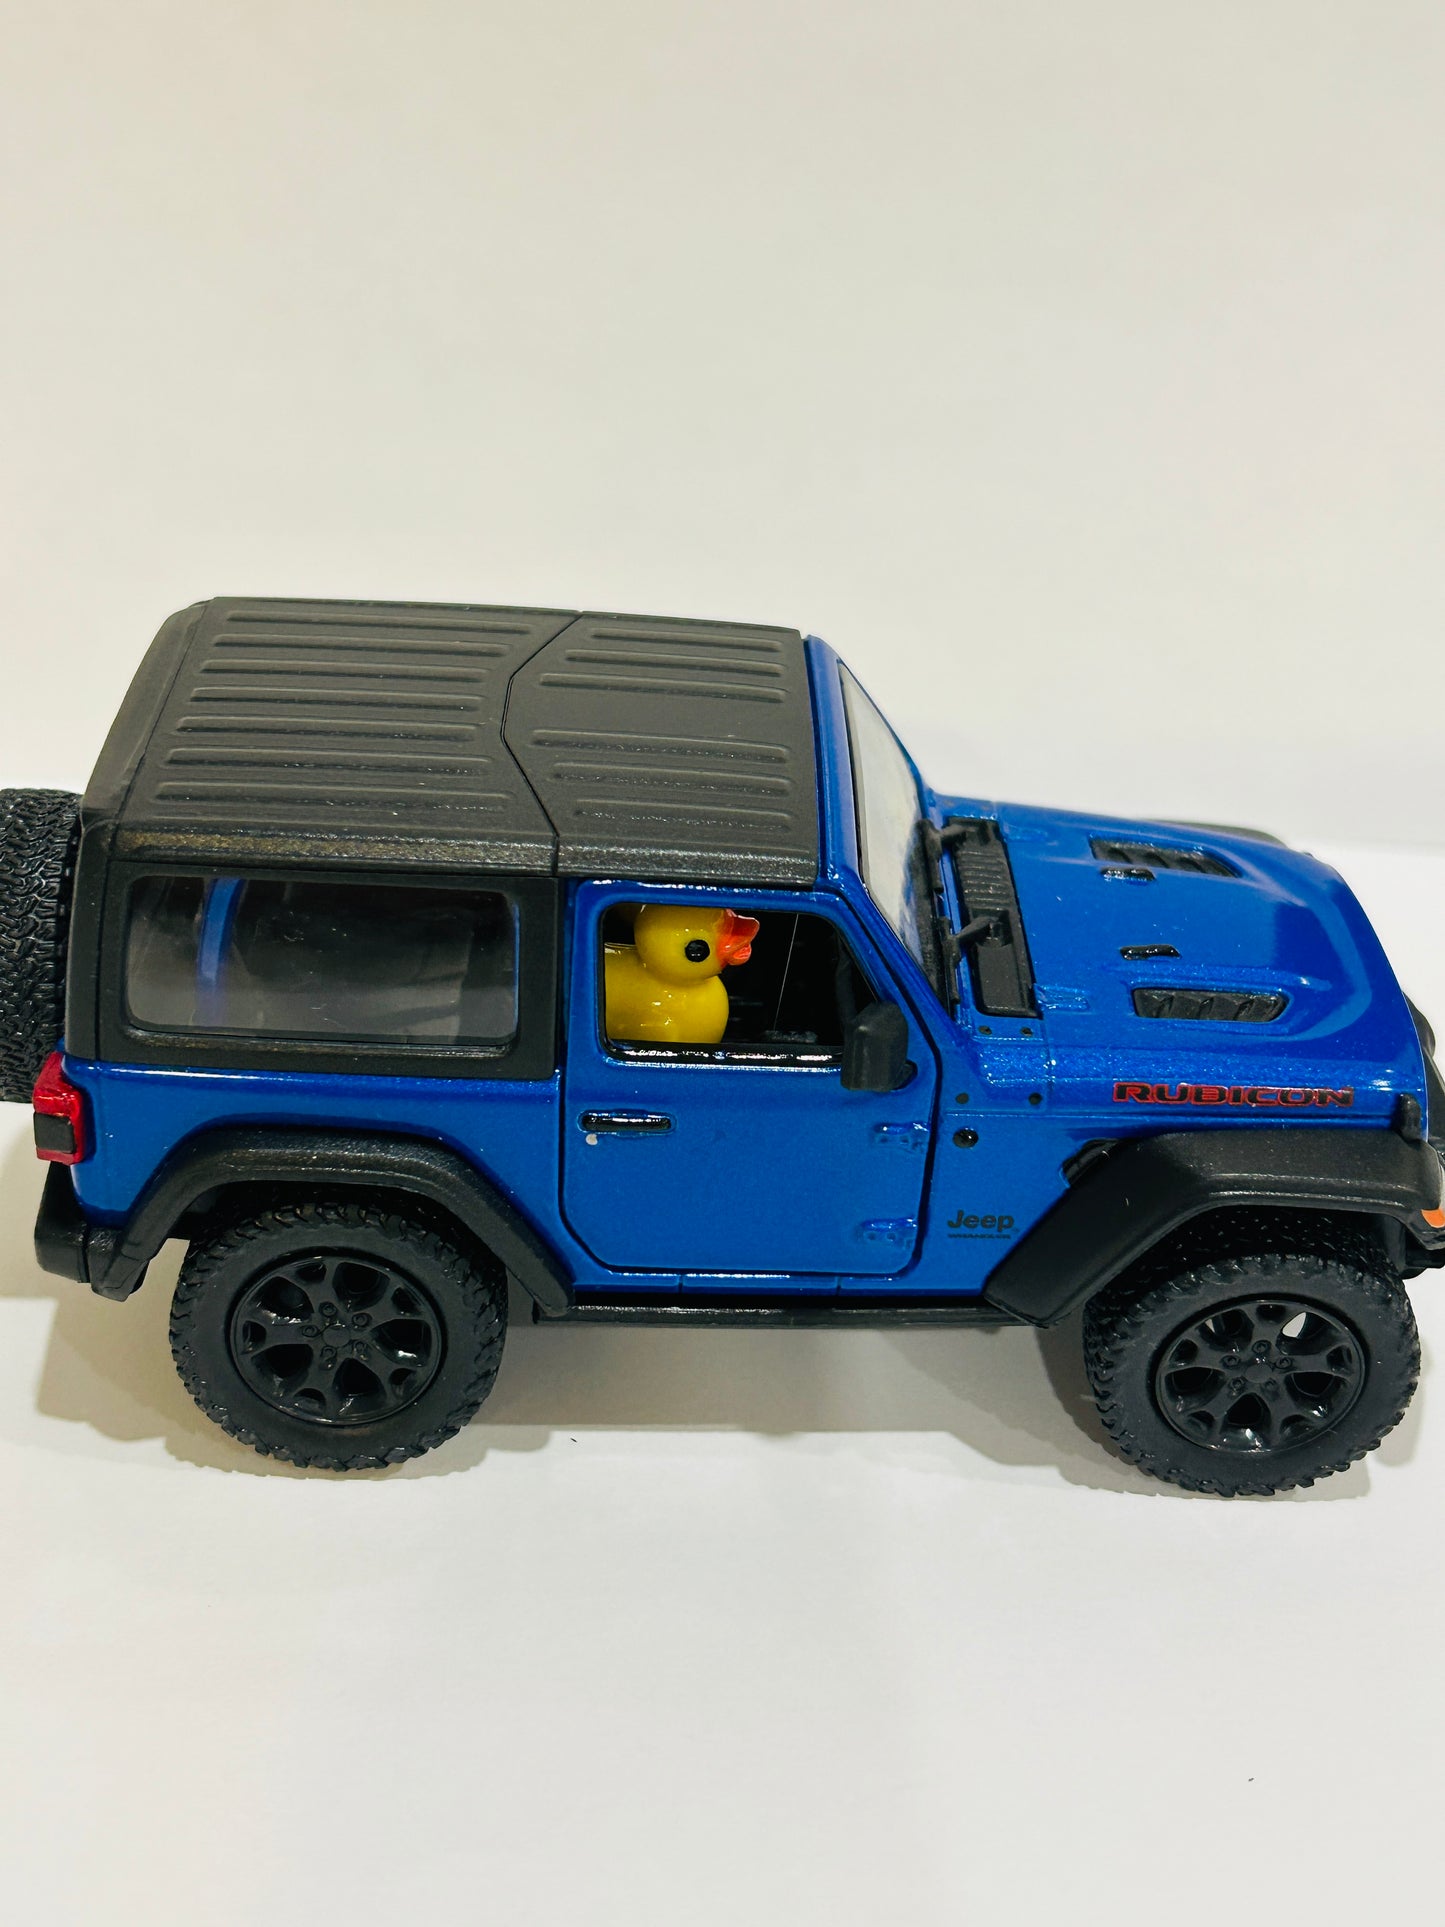 2018 Jeep - Rubicon Hard Top